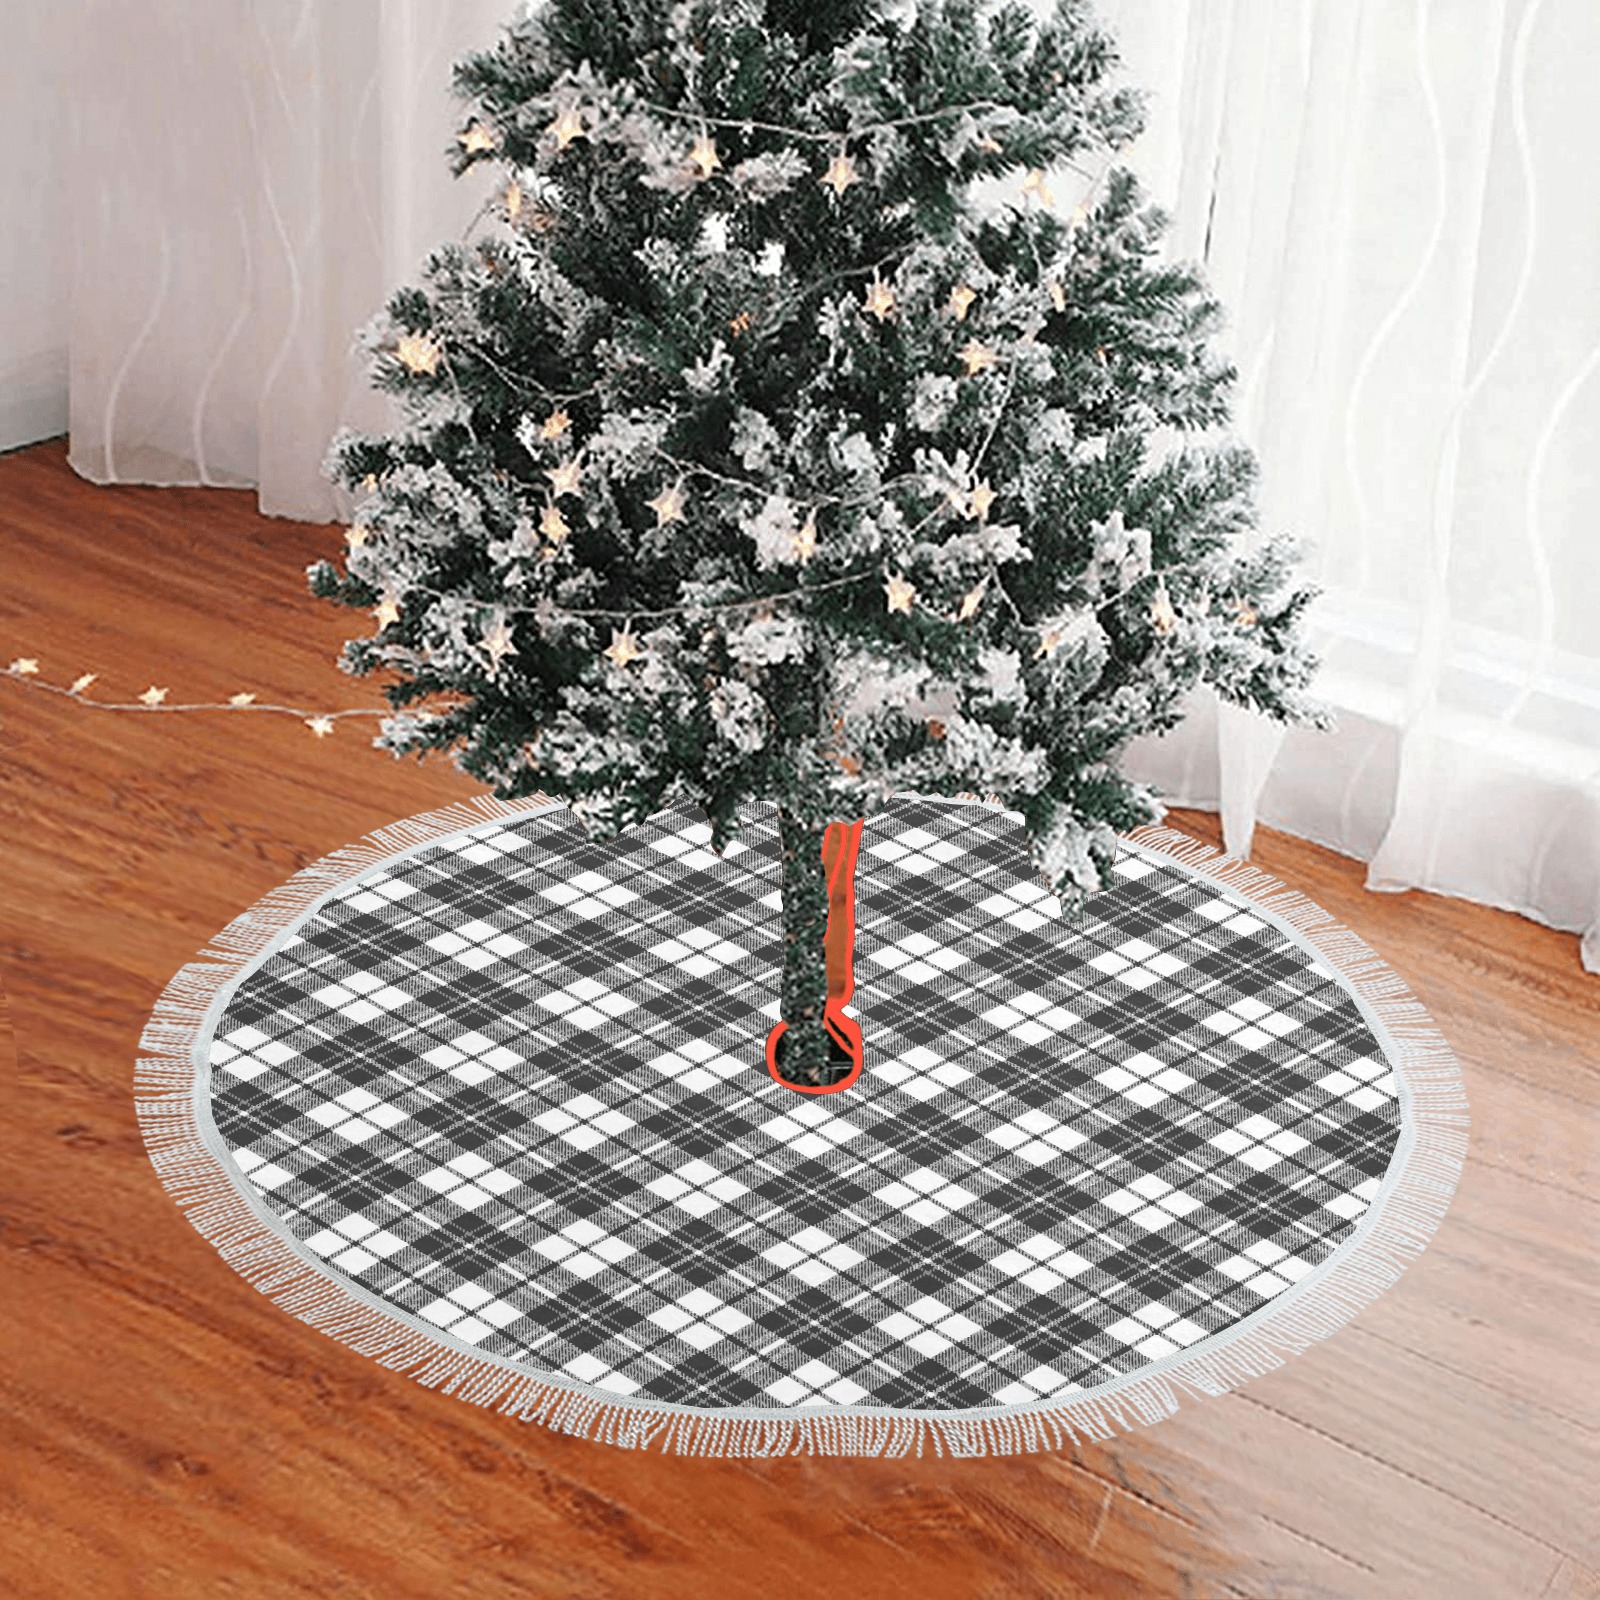 Tartan black white pattern holidays Christmas xmas elegant lines geometric cool fun classic elegance Thick Fringe Christmas Tree Skirt 36"x36"